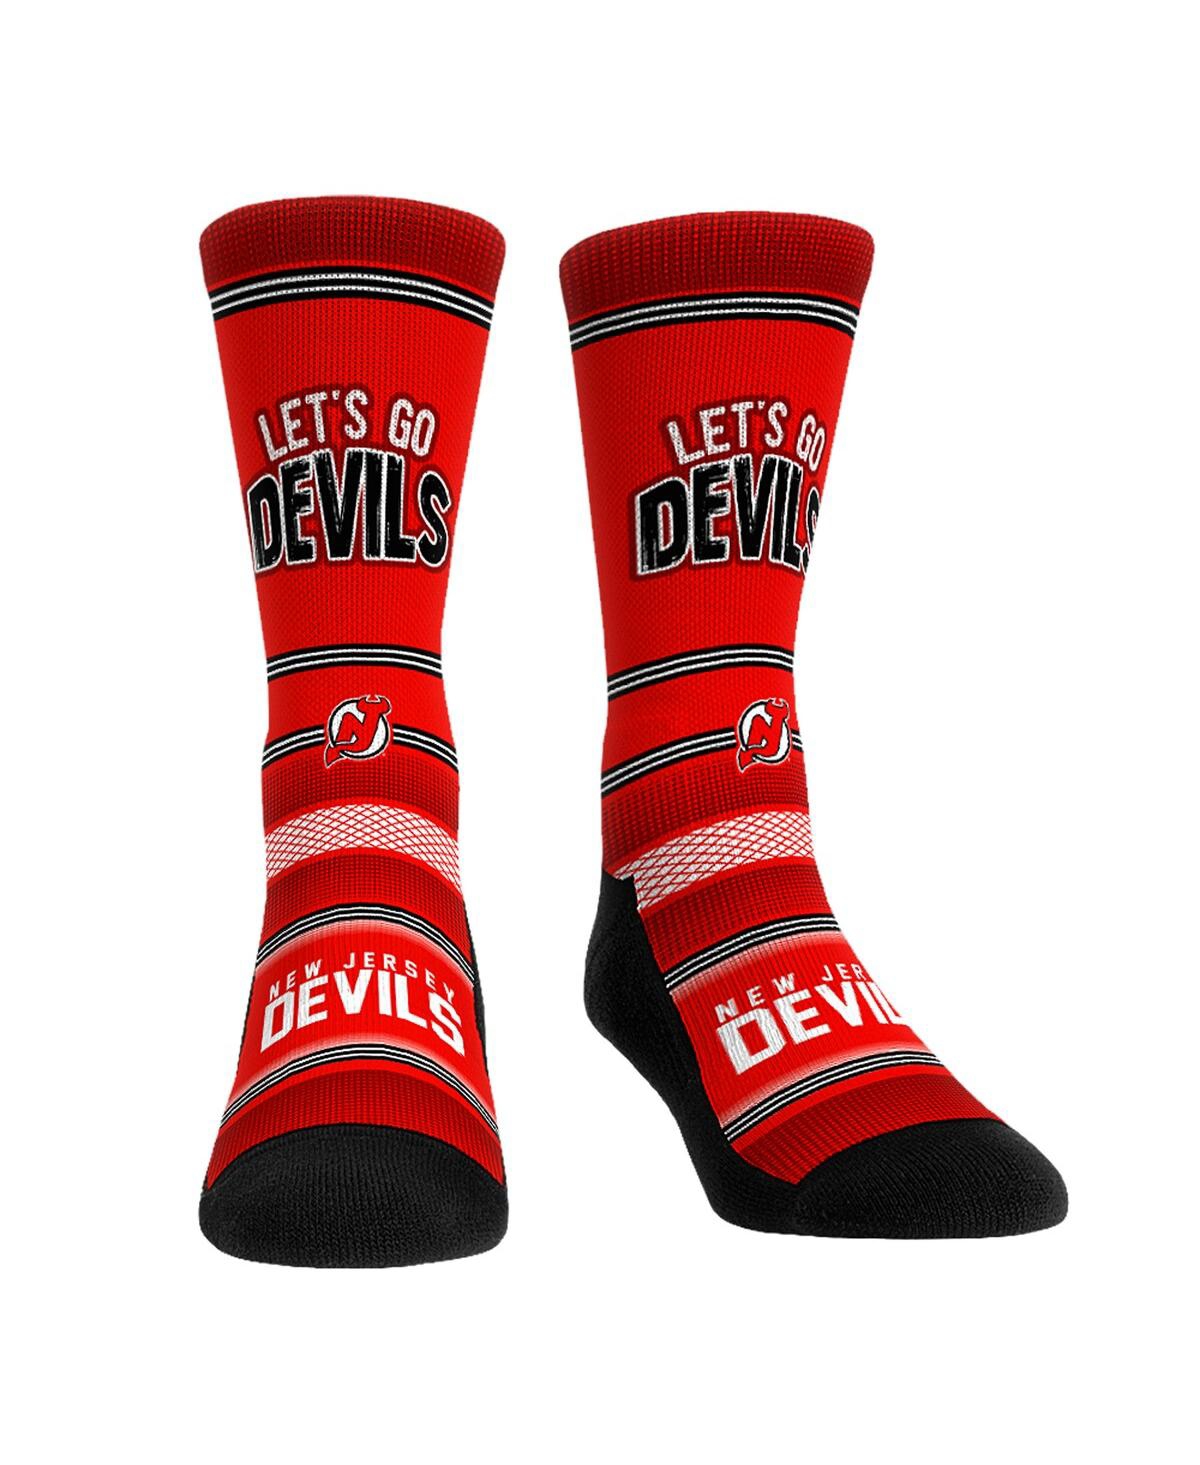 Rock 'em Men's And Women's  Socks New Jersey Devils Team Slogan Crew Socks In Red